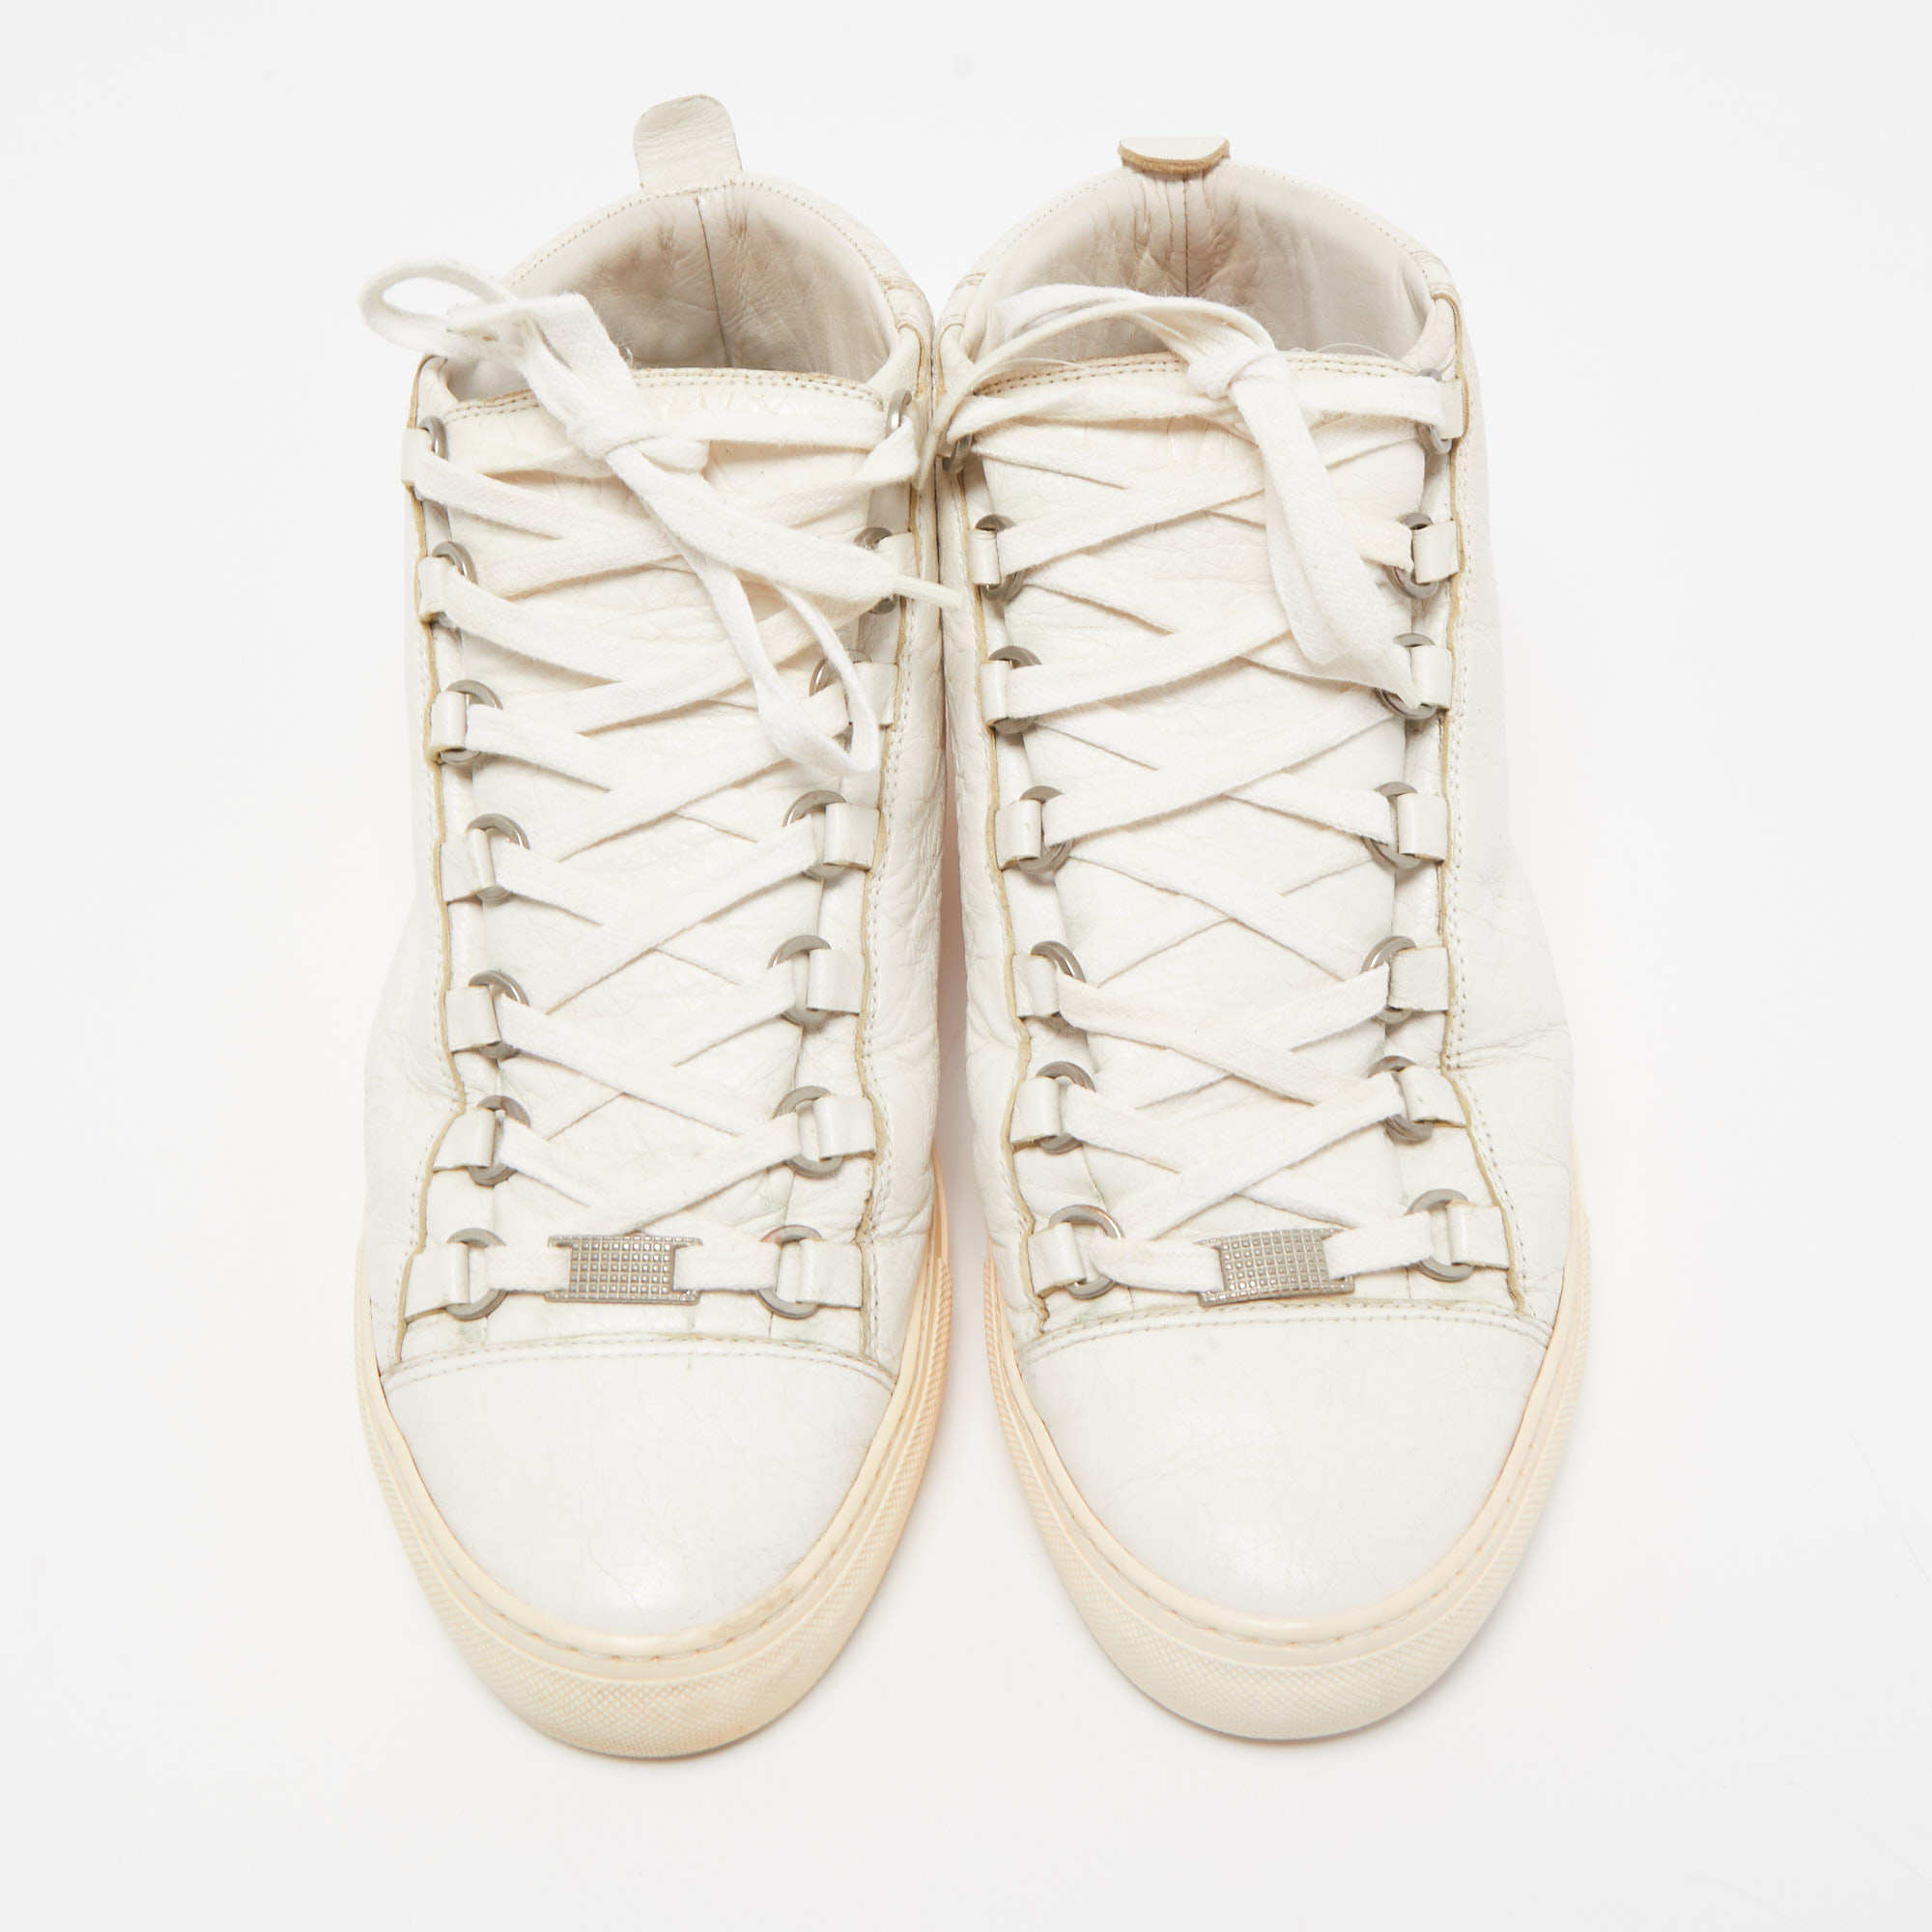 Balenciaga White Leather Arena High Top Sneakers Size 40